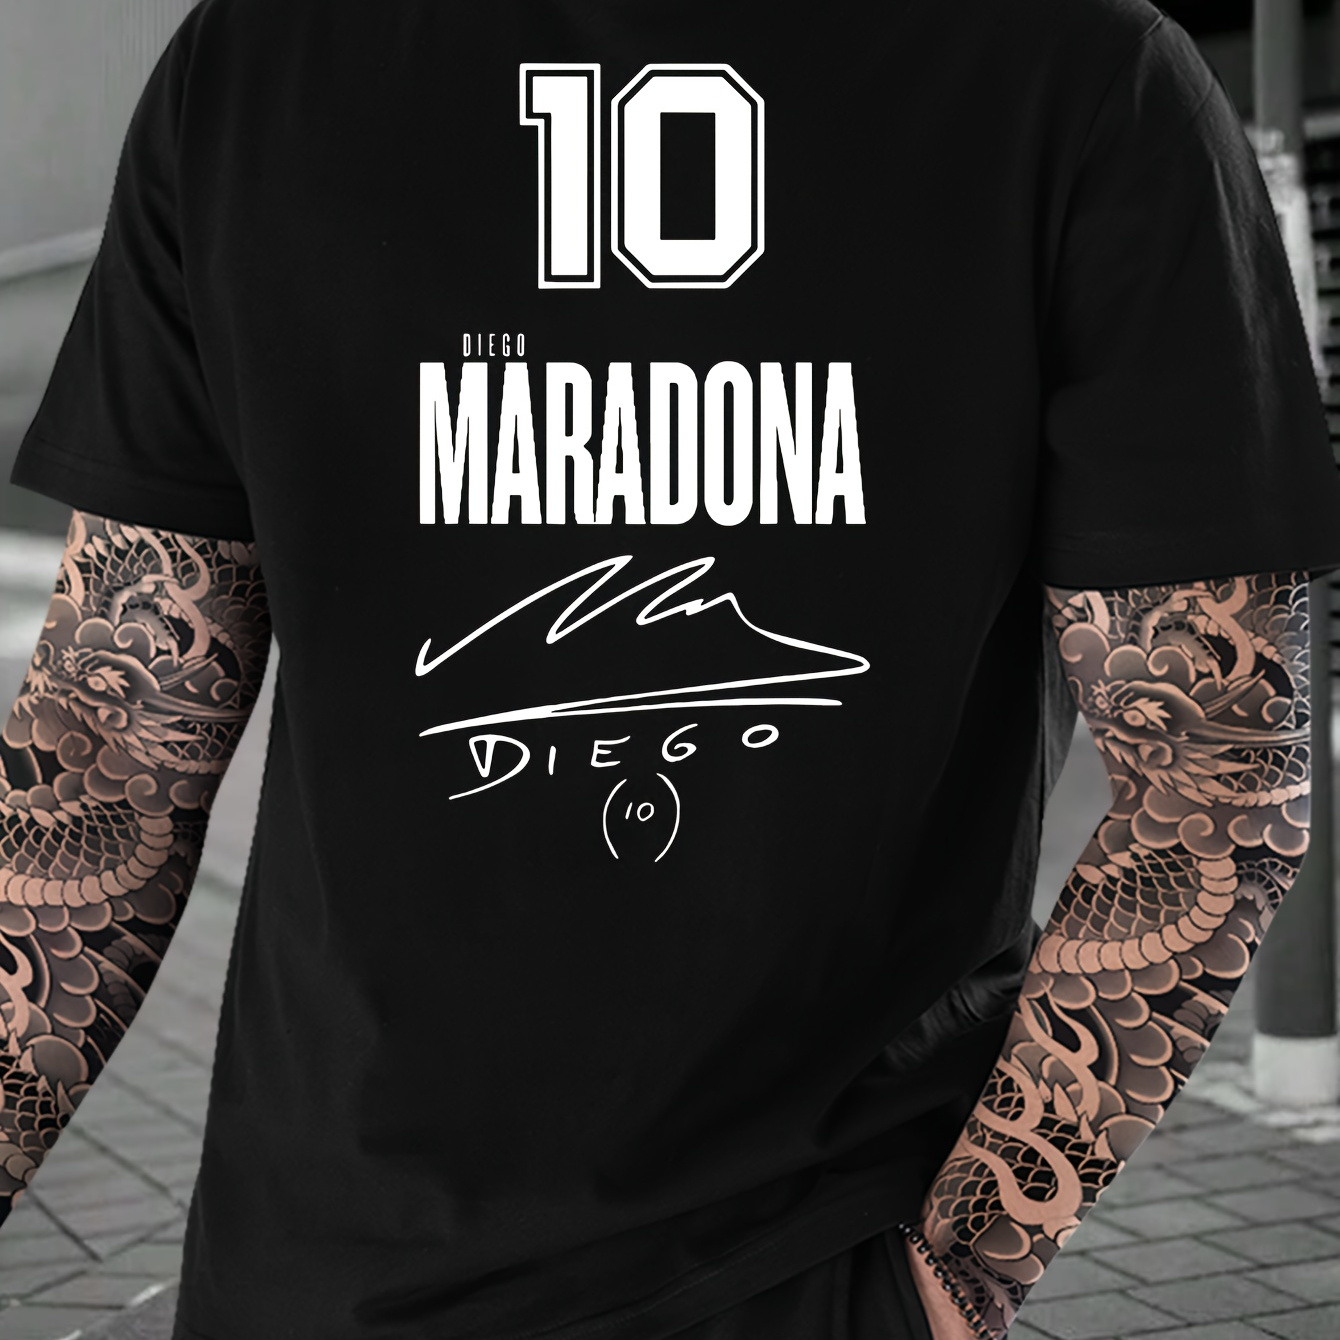 

10 Maradona Letter Print Tee Shirt, Tees For Men, Casual Short Sleeve T-shirt For Summer